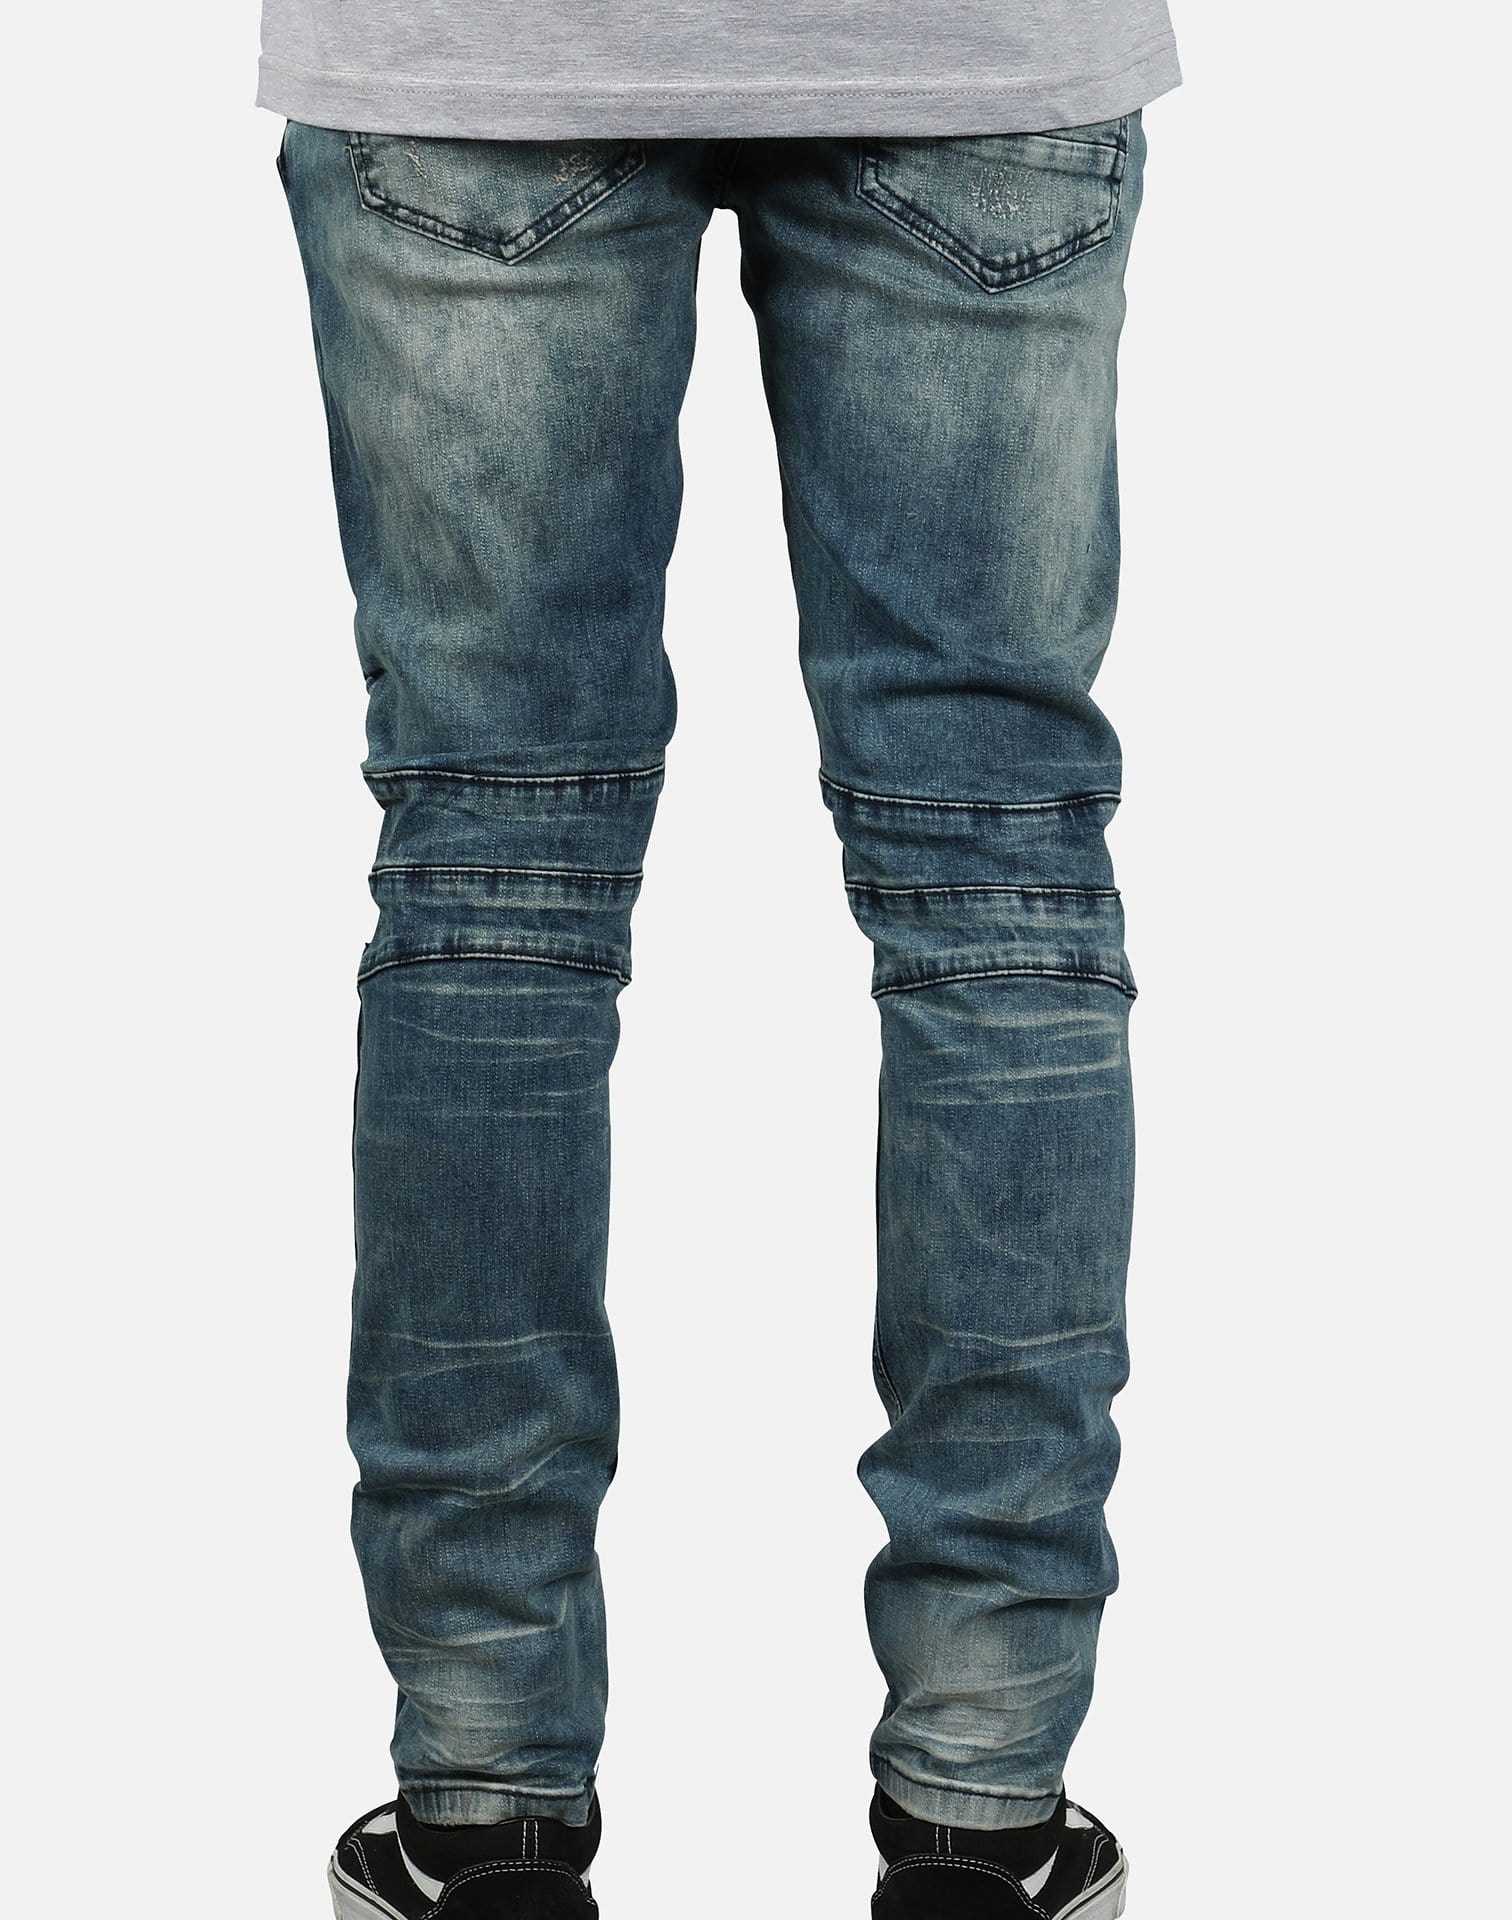 Kilogram Inc. Men's Distressed Moto Jeans